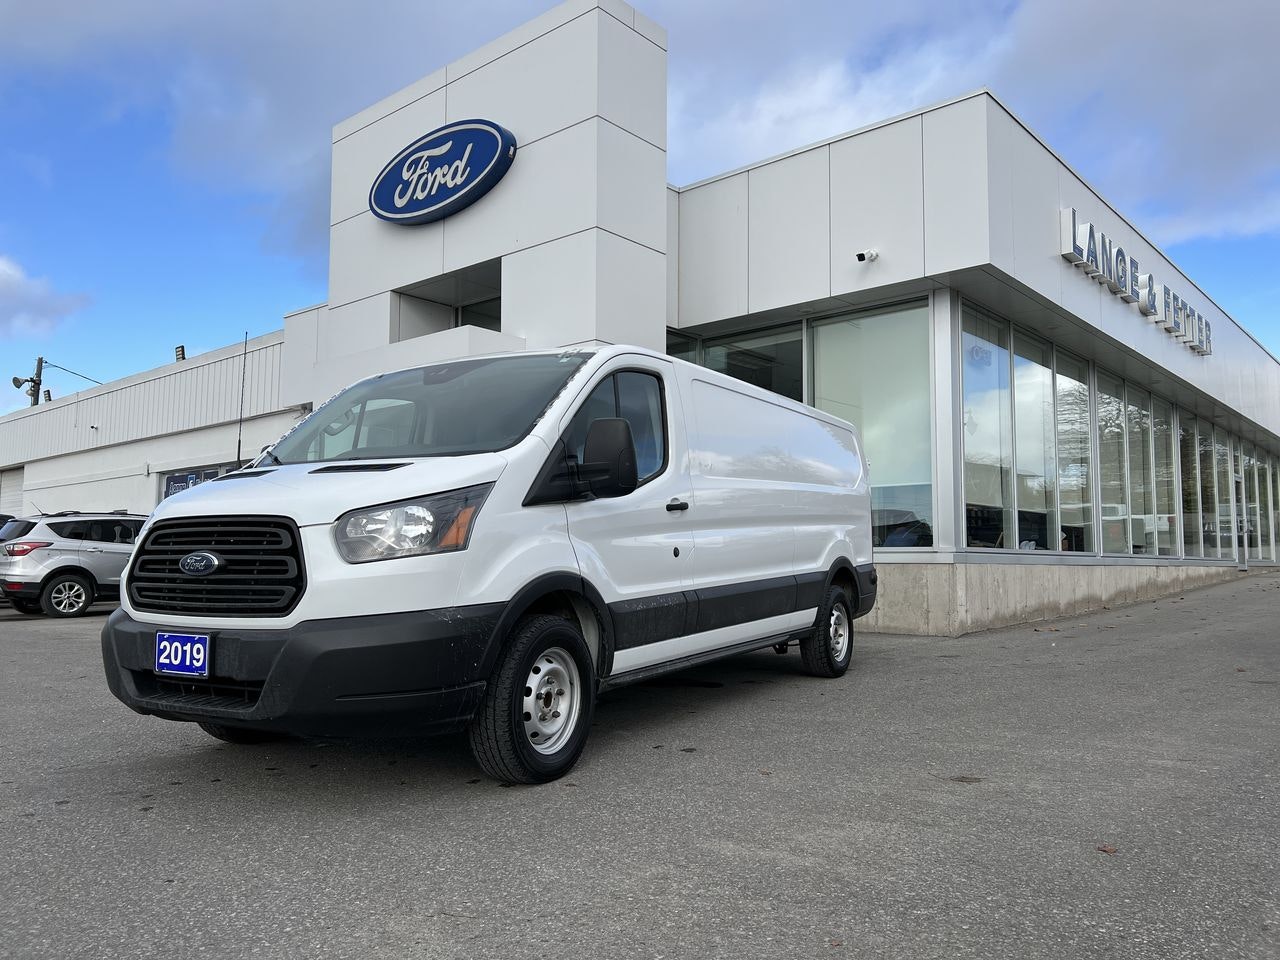 2019 Ford Transit Van - P20732 Full Image 1